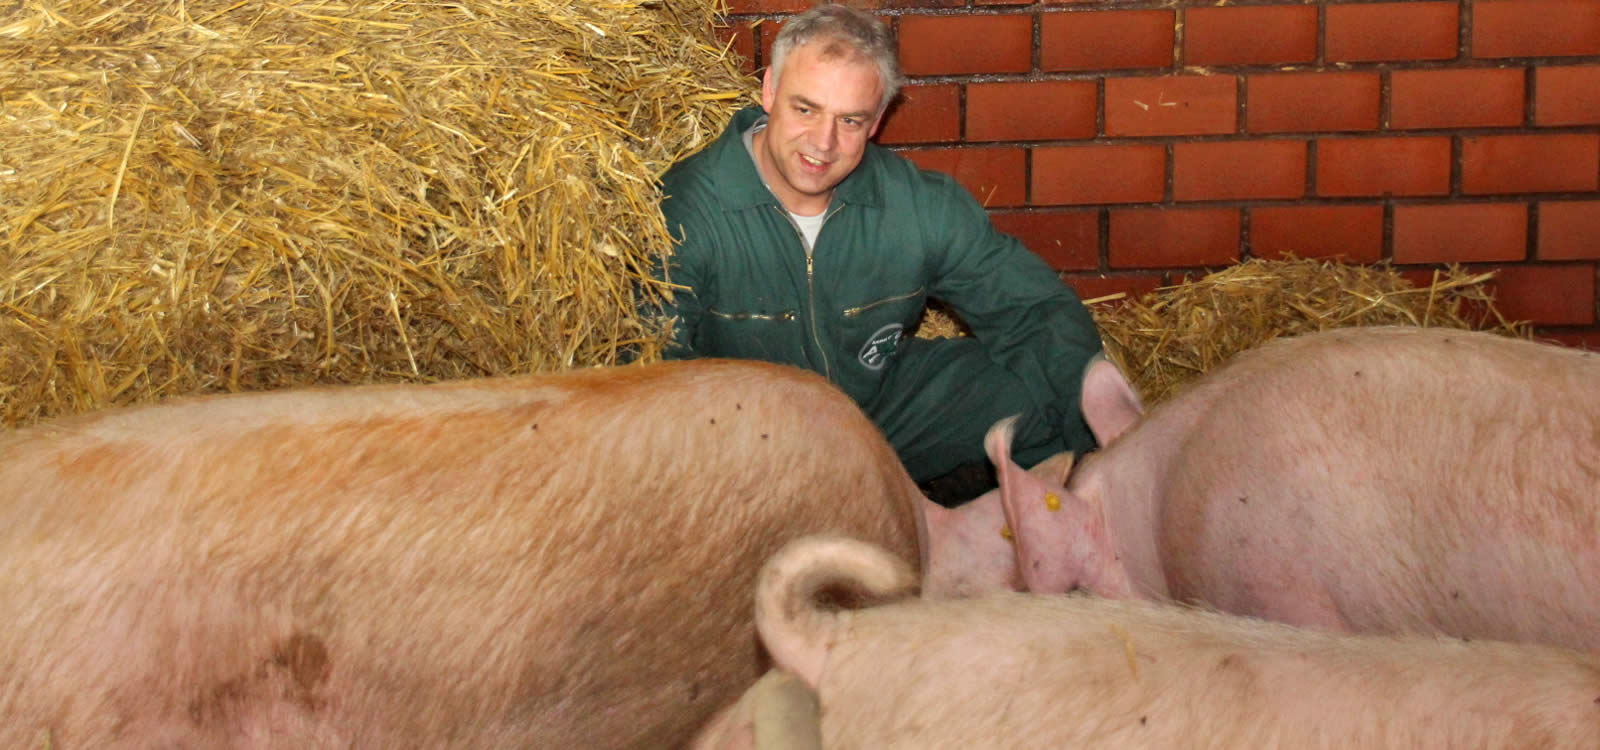 AWS - Animal Welfare Service GmbH - Animal Welfare is the future!